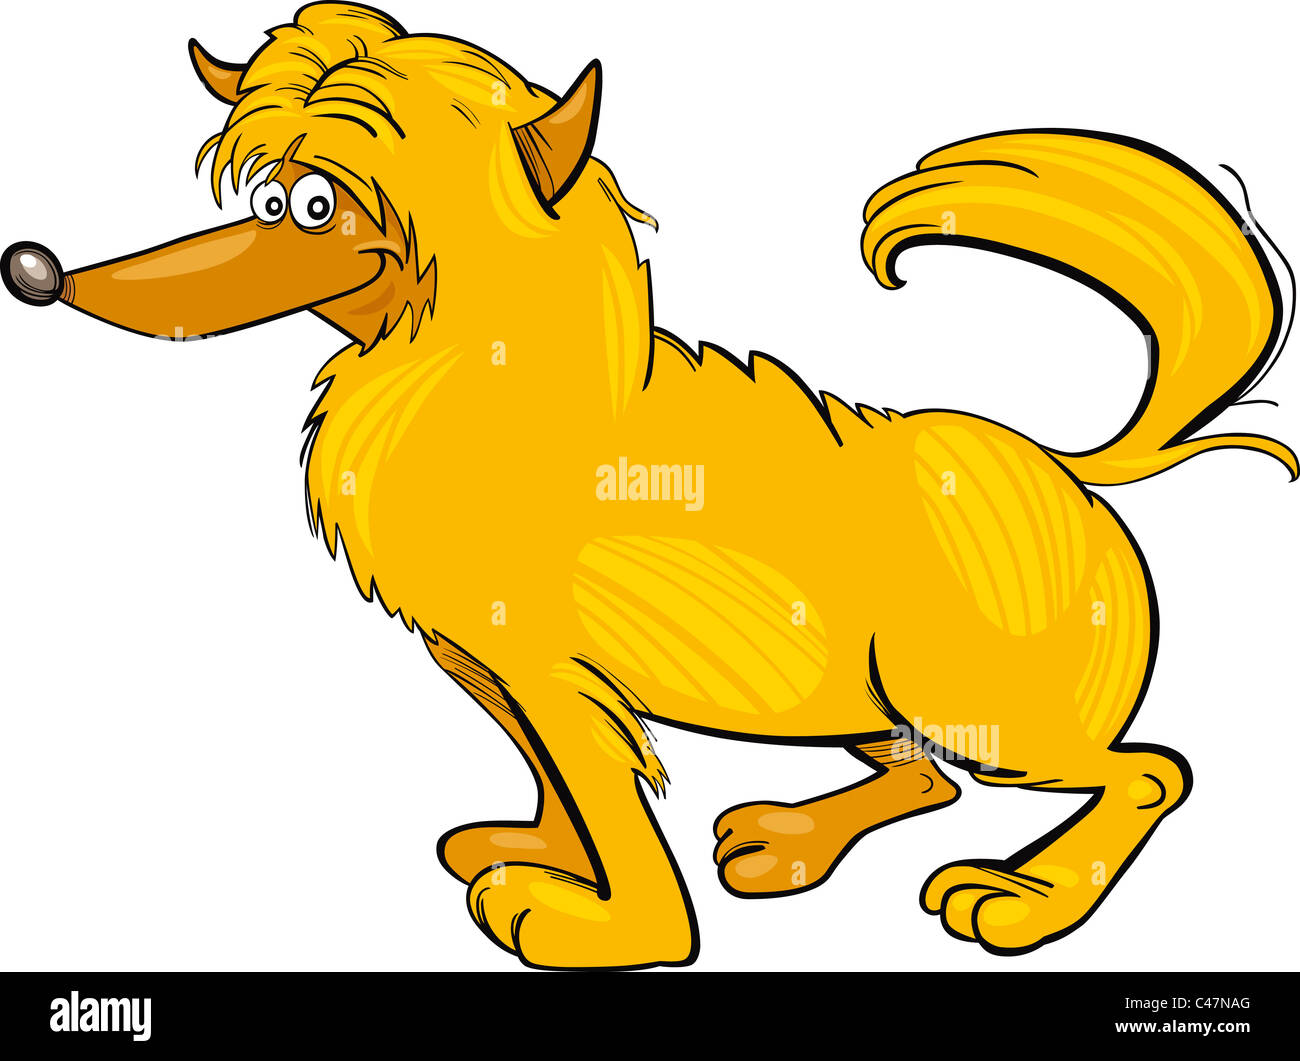 Yellow dog cartoon hi-res stock photography and images - Alamy